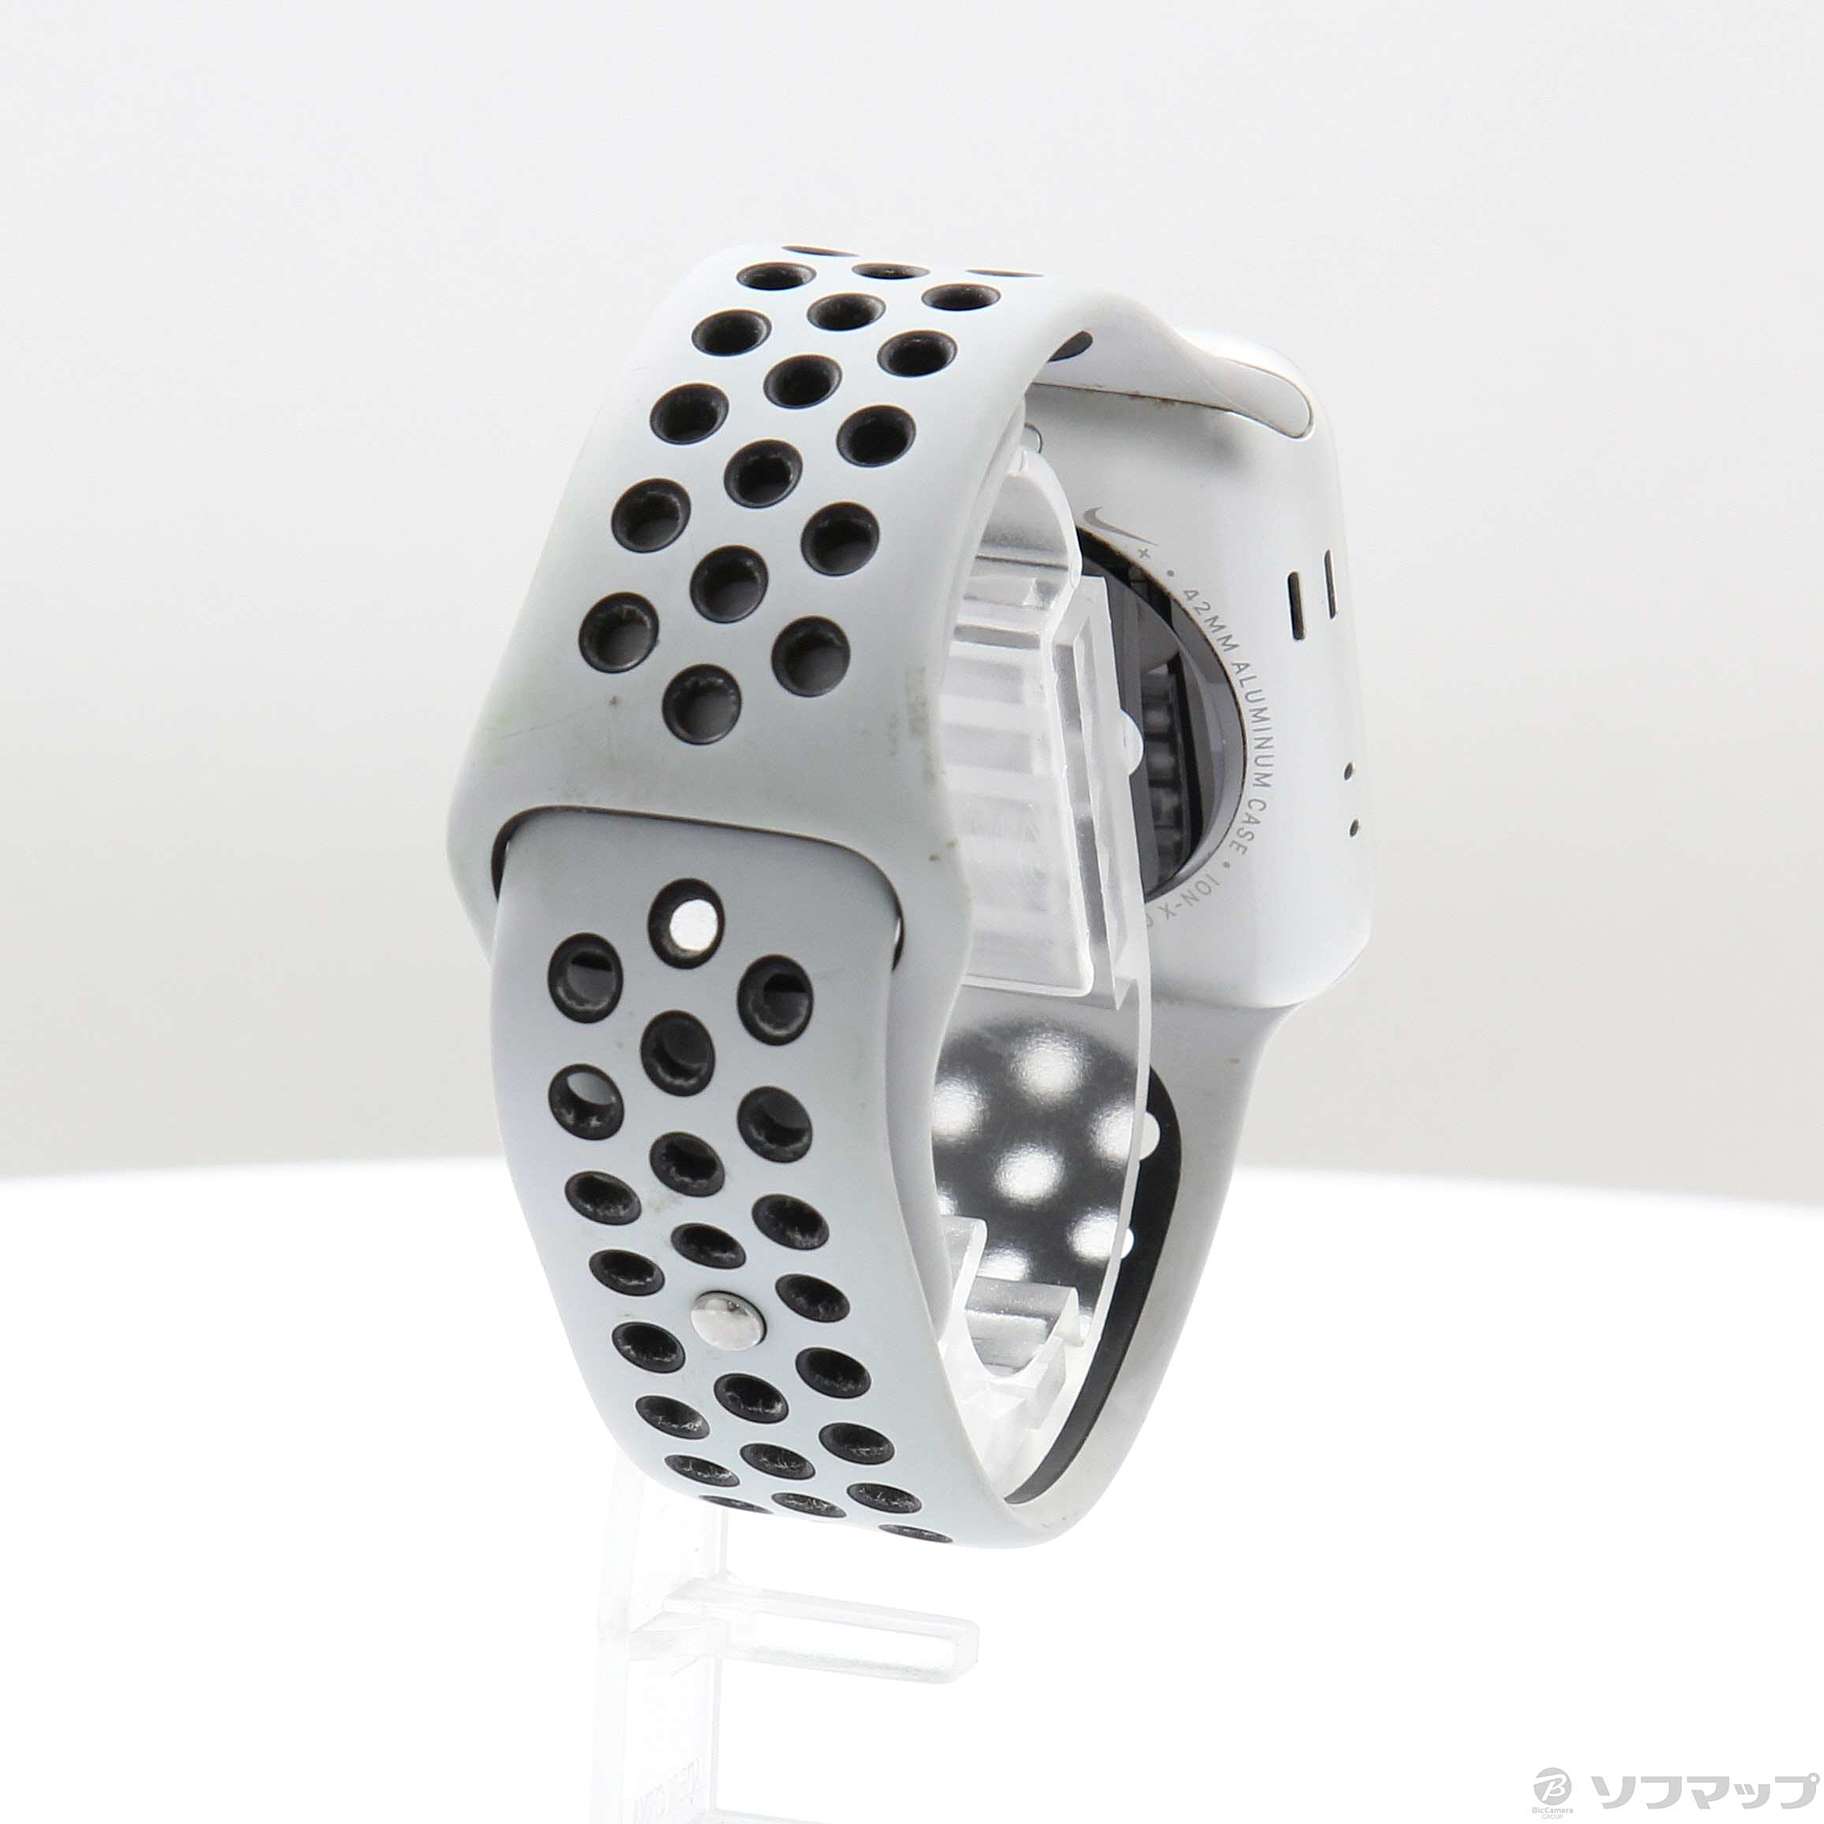 Applewatch series3 NIKE シルバー 42mm